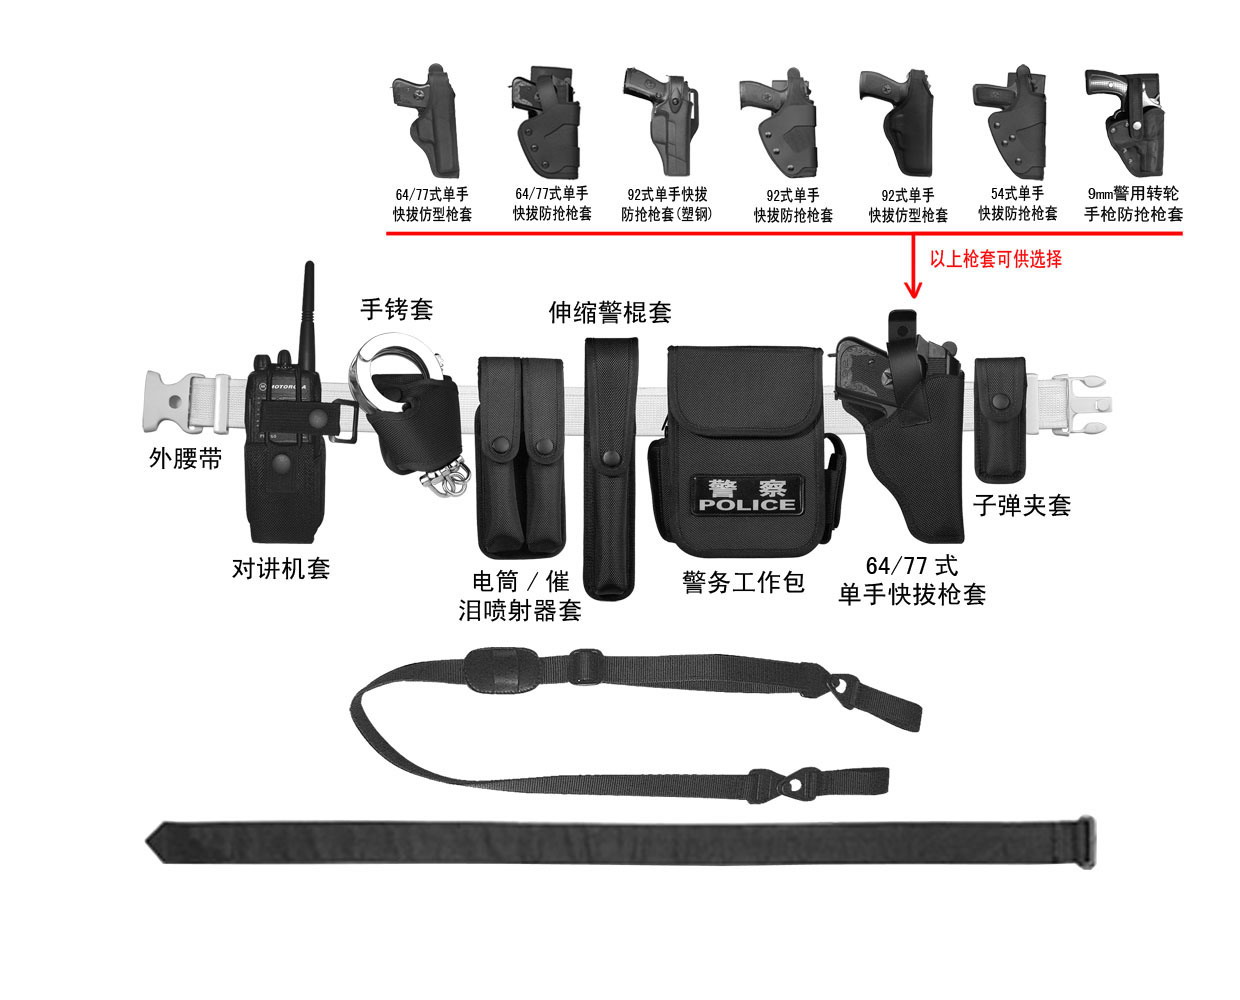 L8001C police special belt components - nylon (Shanghai Public Security Bureau used)